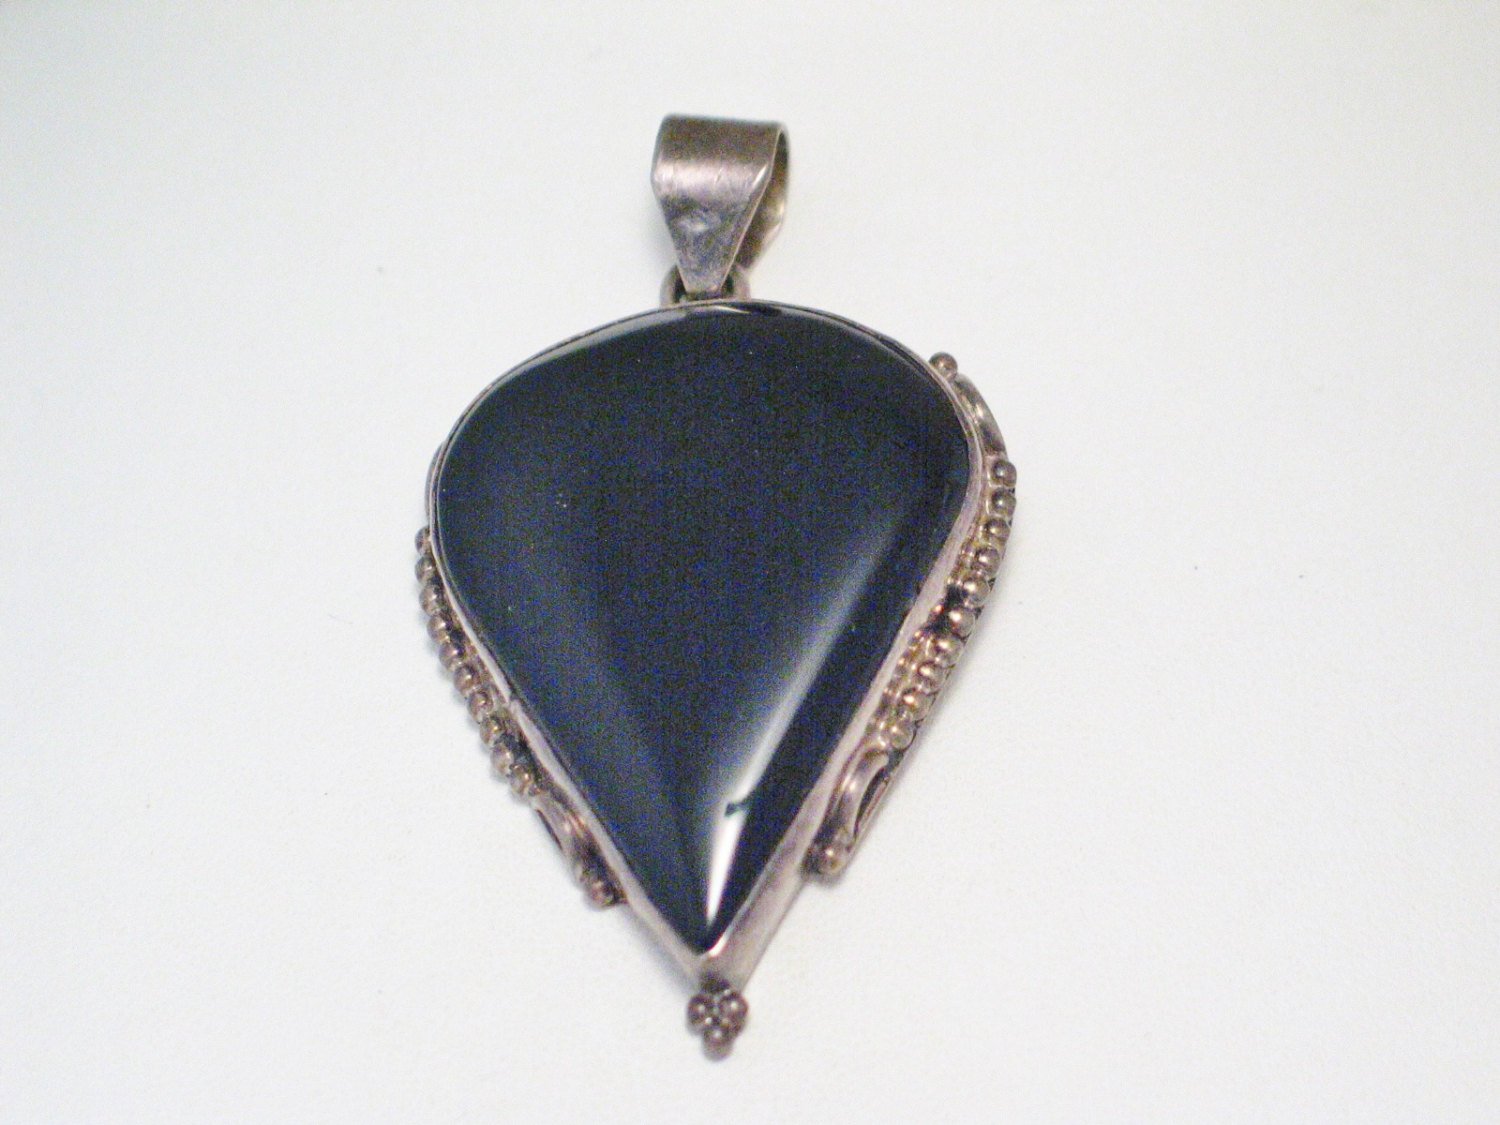 Pendants | Large Unique Sterling Silver Black Agate Stone Focal Pendant | Jewelry